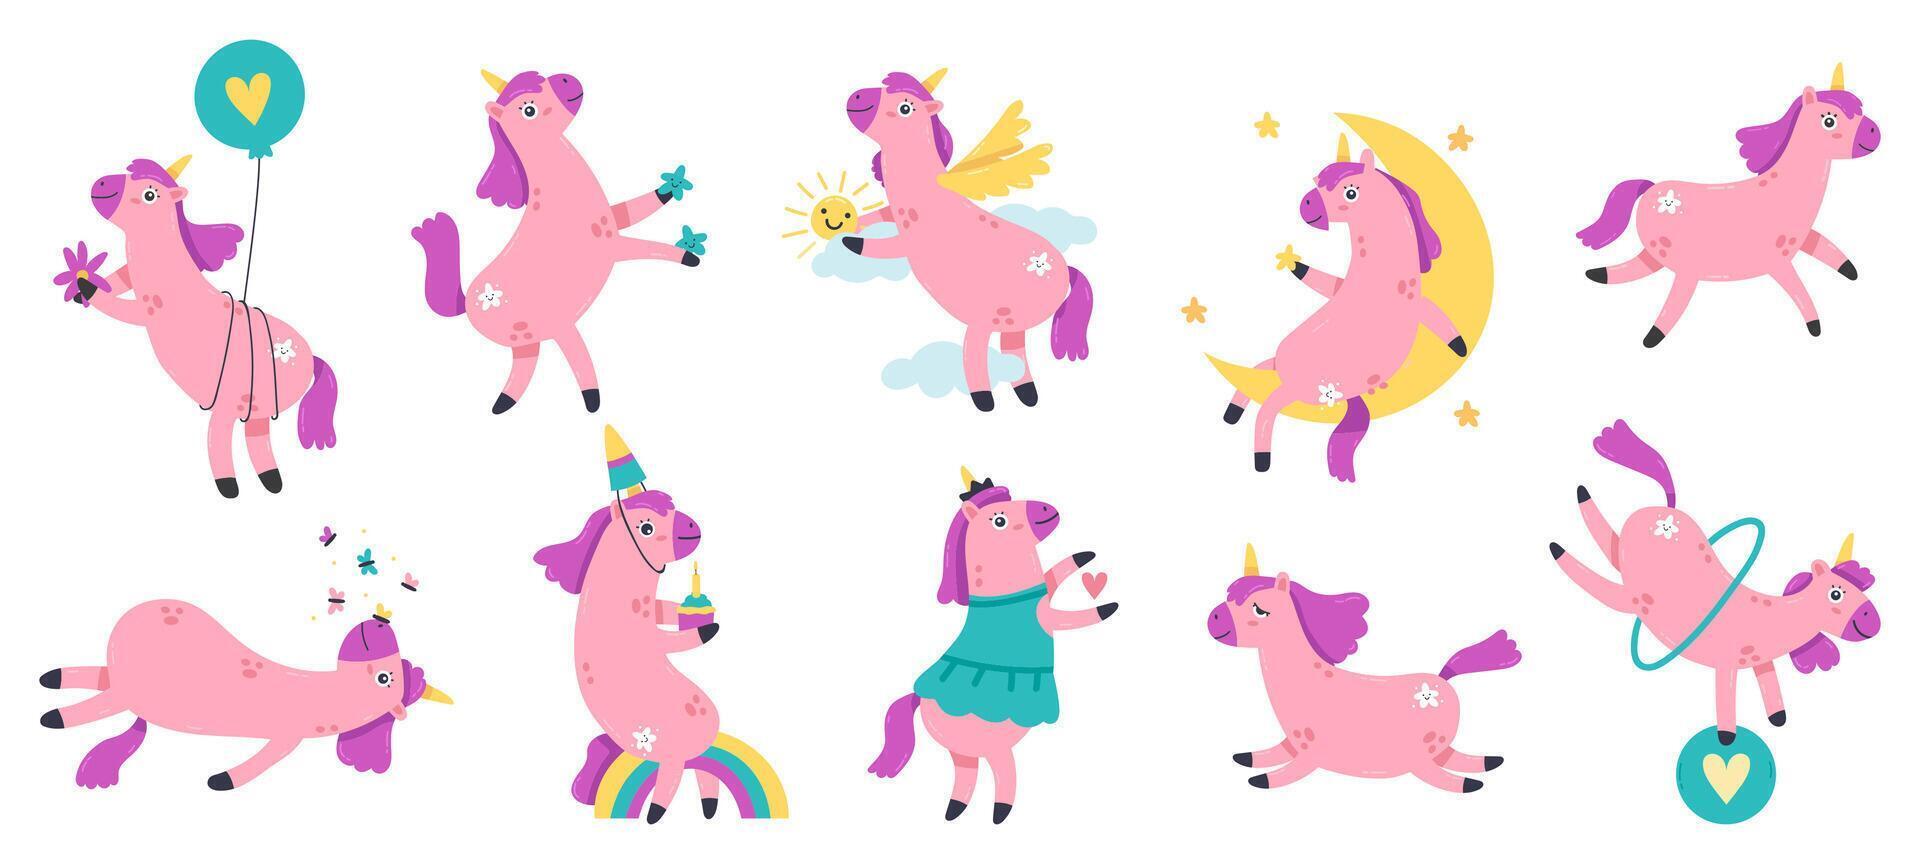 linda unicornios gracioso mano dibujado arco iris unicornios, magia cuento de hadas unicornio mascotas rosado pequeño bebé unicornios vector ilustraciones